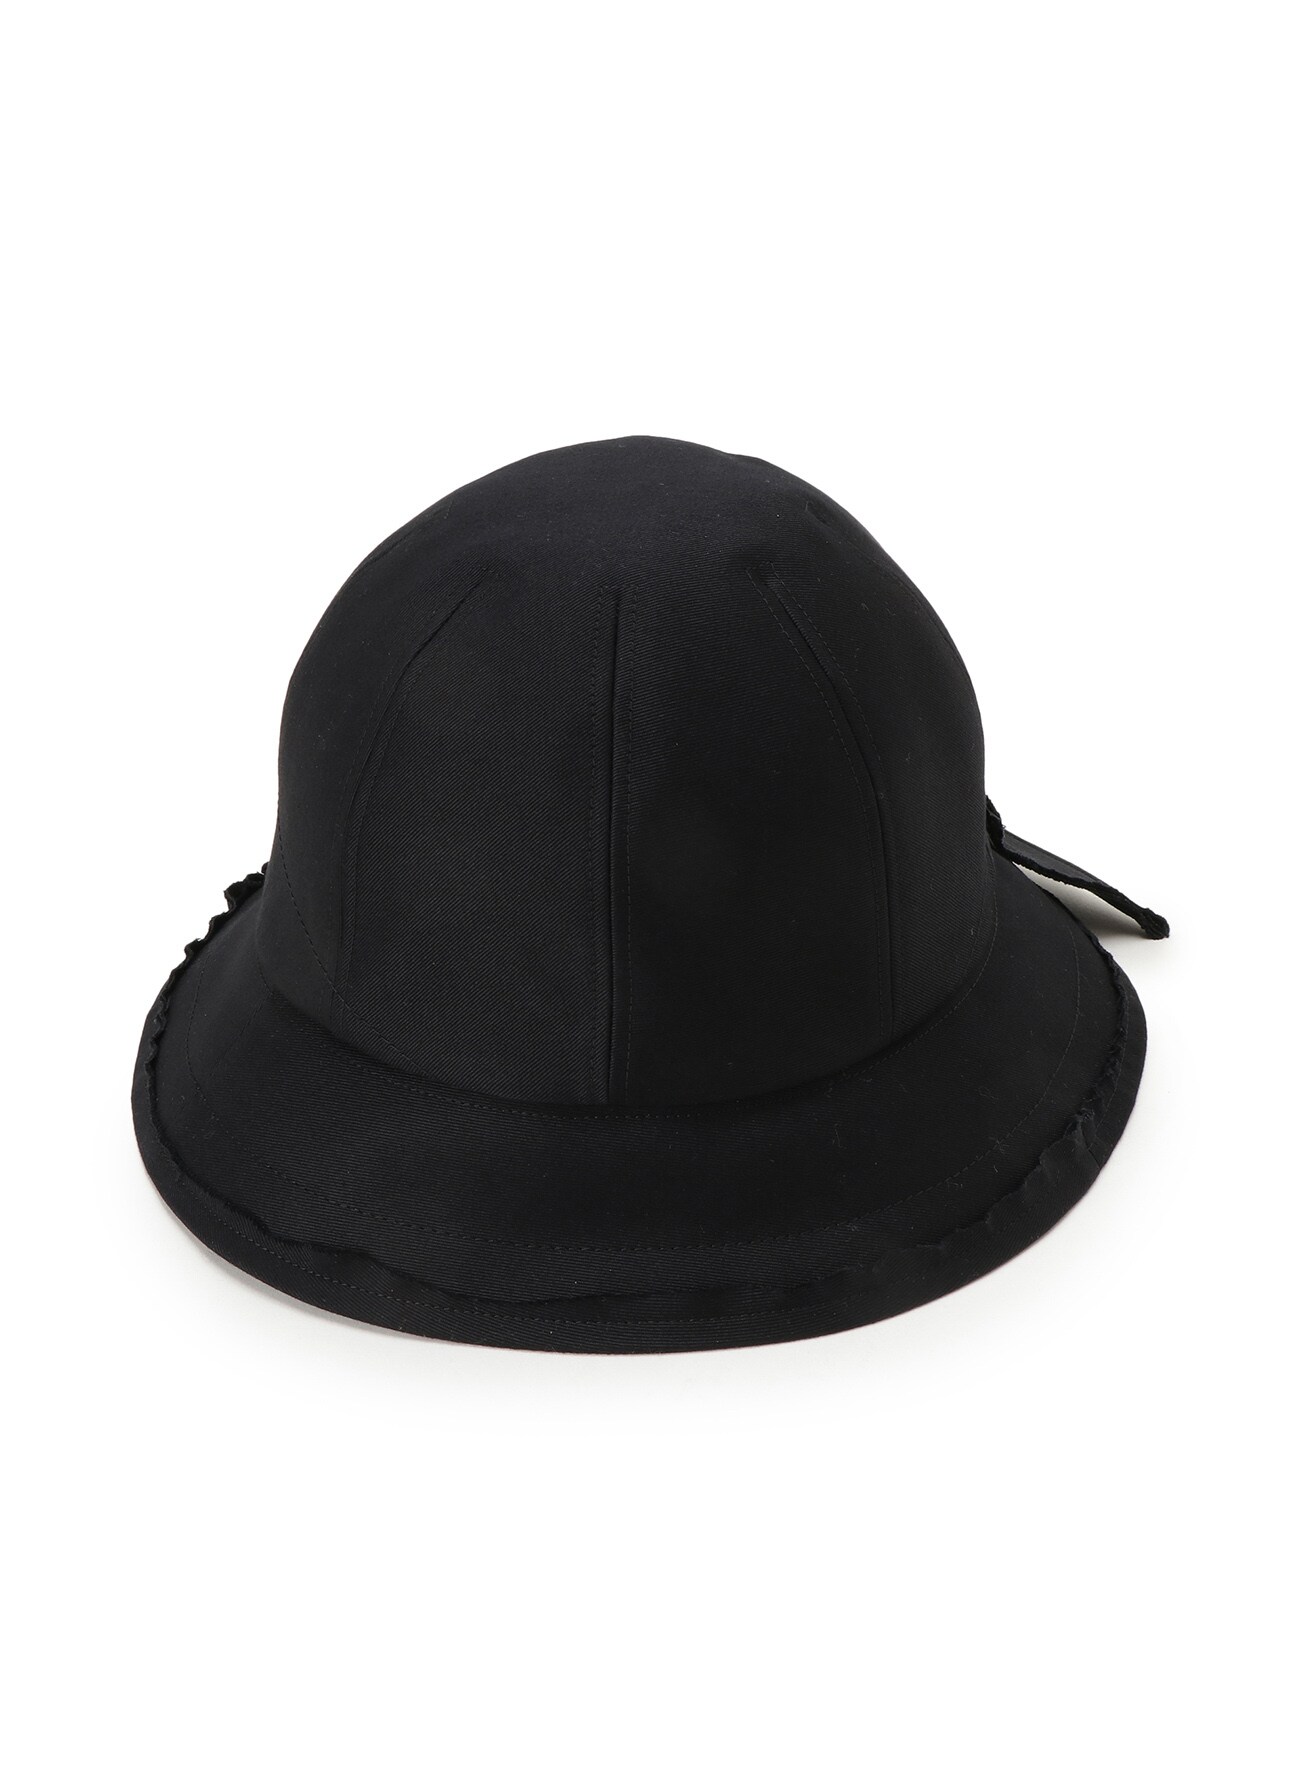 Cotton gabardine ishica Bell Hat